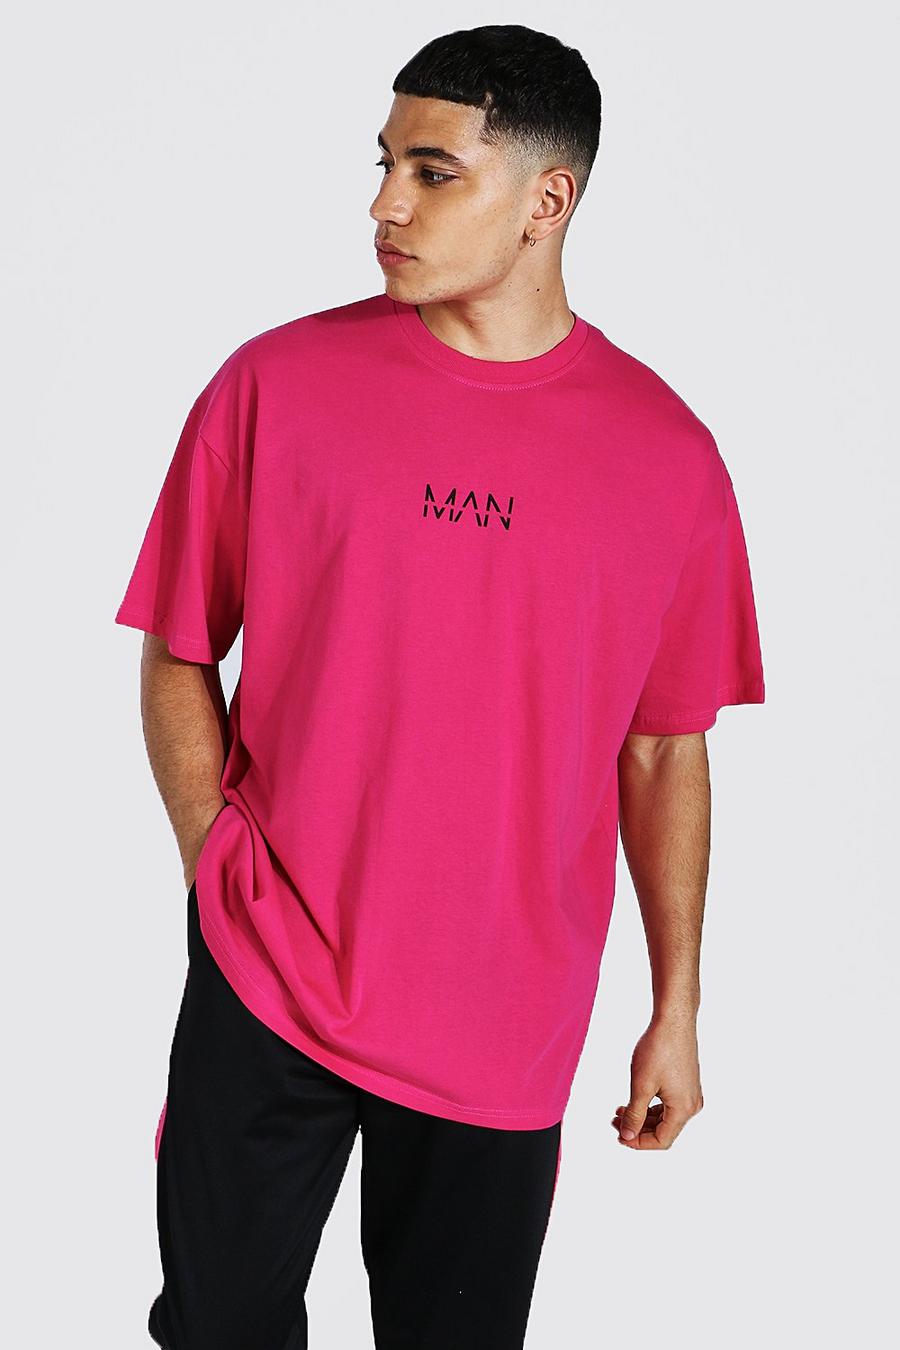 Pink Oversized Original Man Graphic T-Shirt image number 1